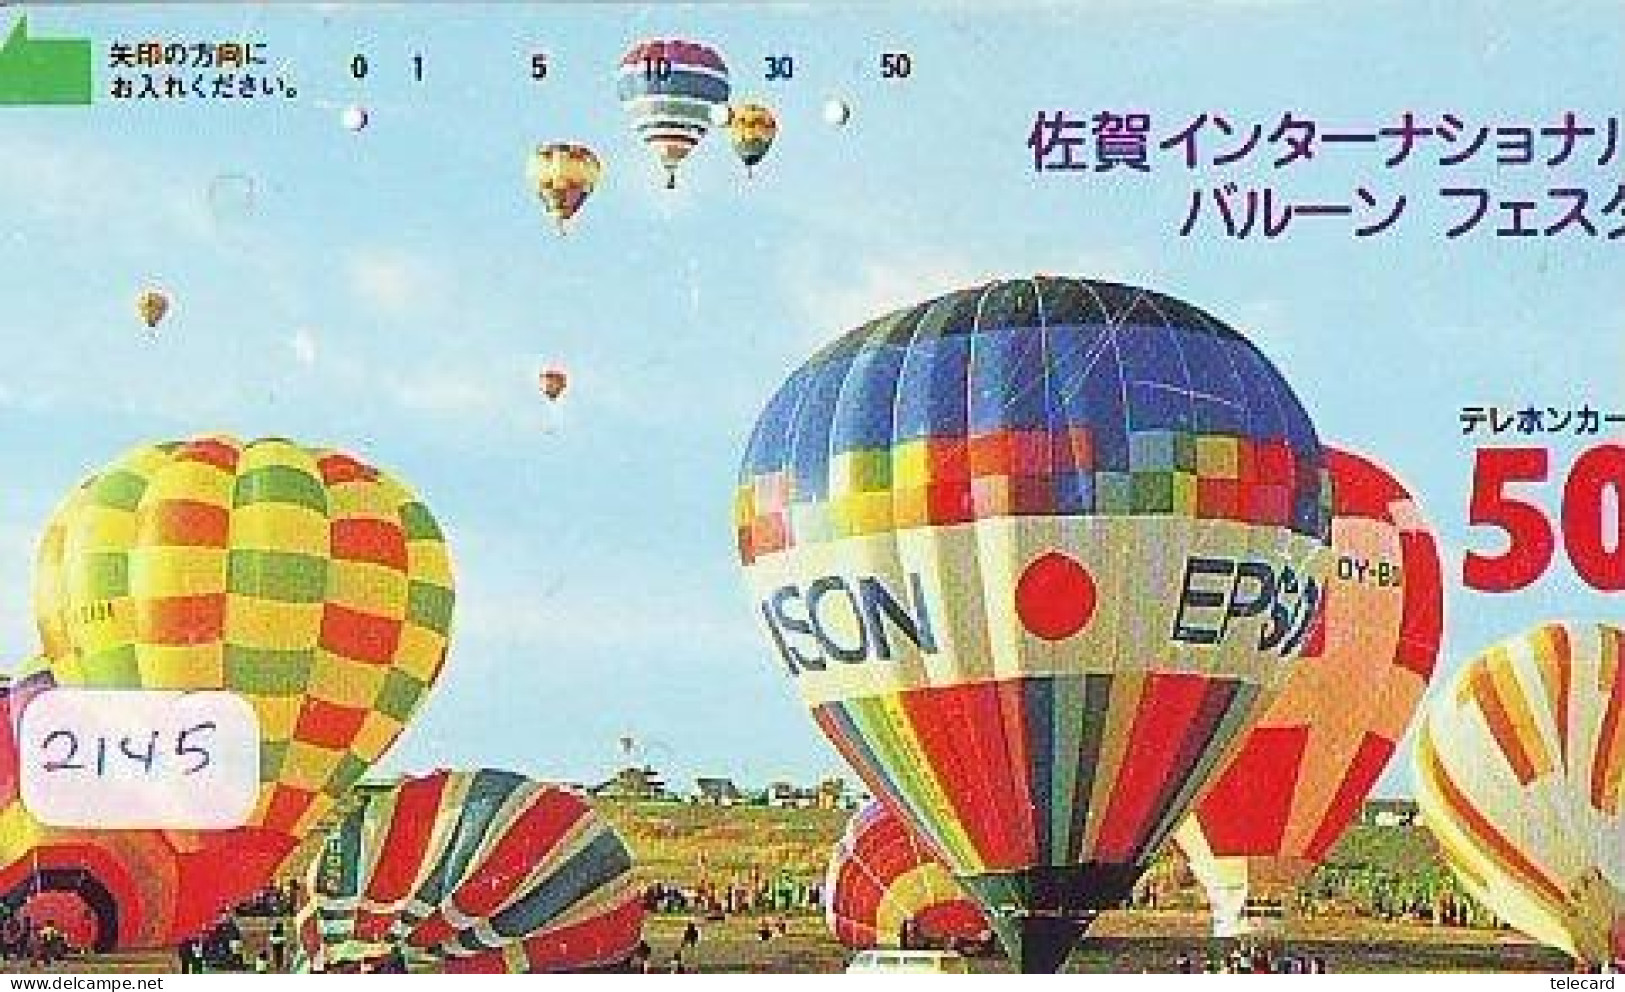 Telecarte JAPON * (2145) BALLON * MONTGOLFIERE - Hot Air Balloon * Aerostato * Heißluft PHONECARD JAPAN - - Sport